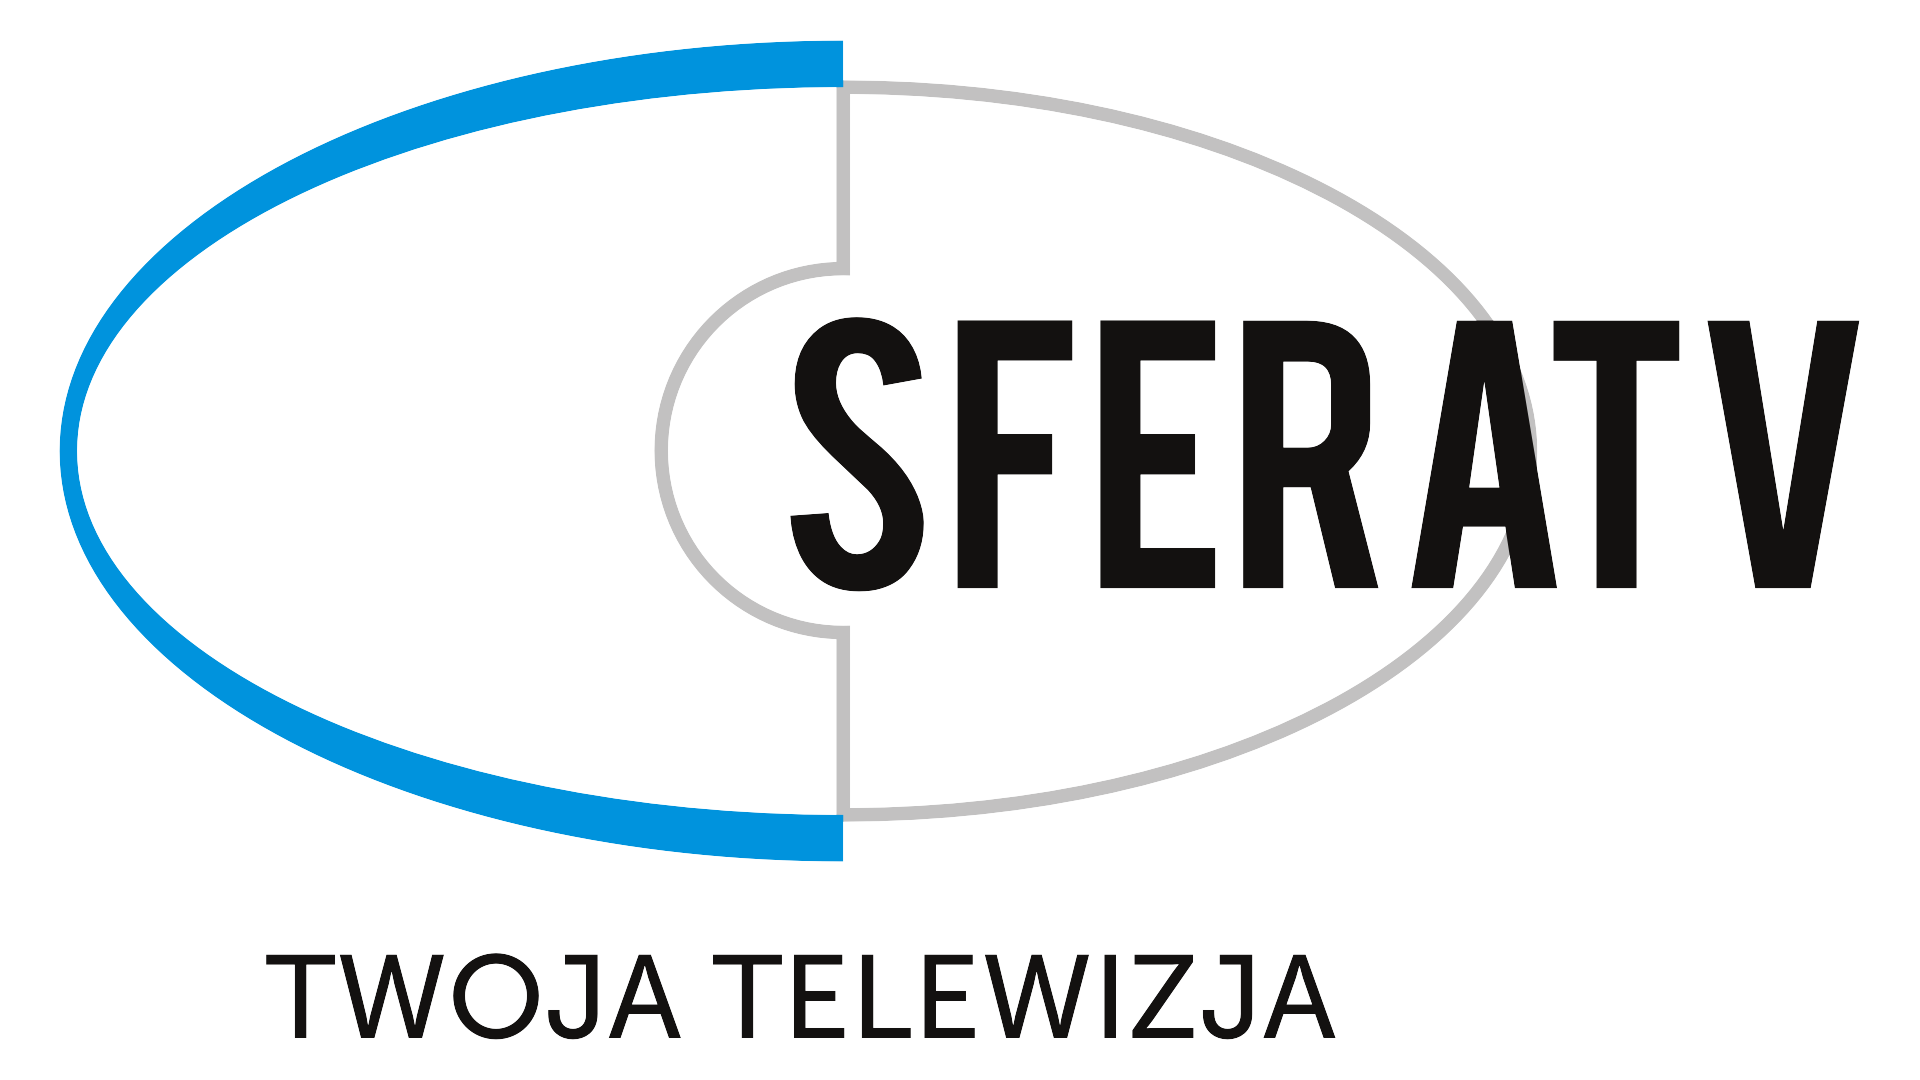 Sfera TV logo.png